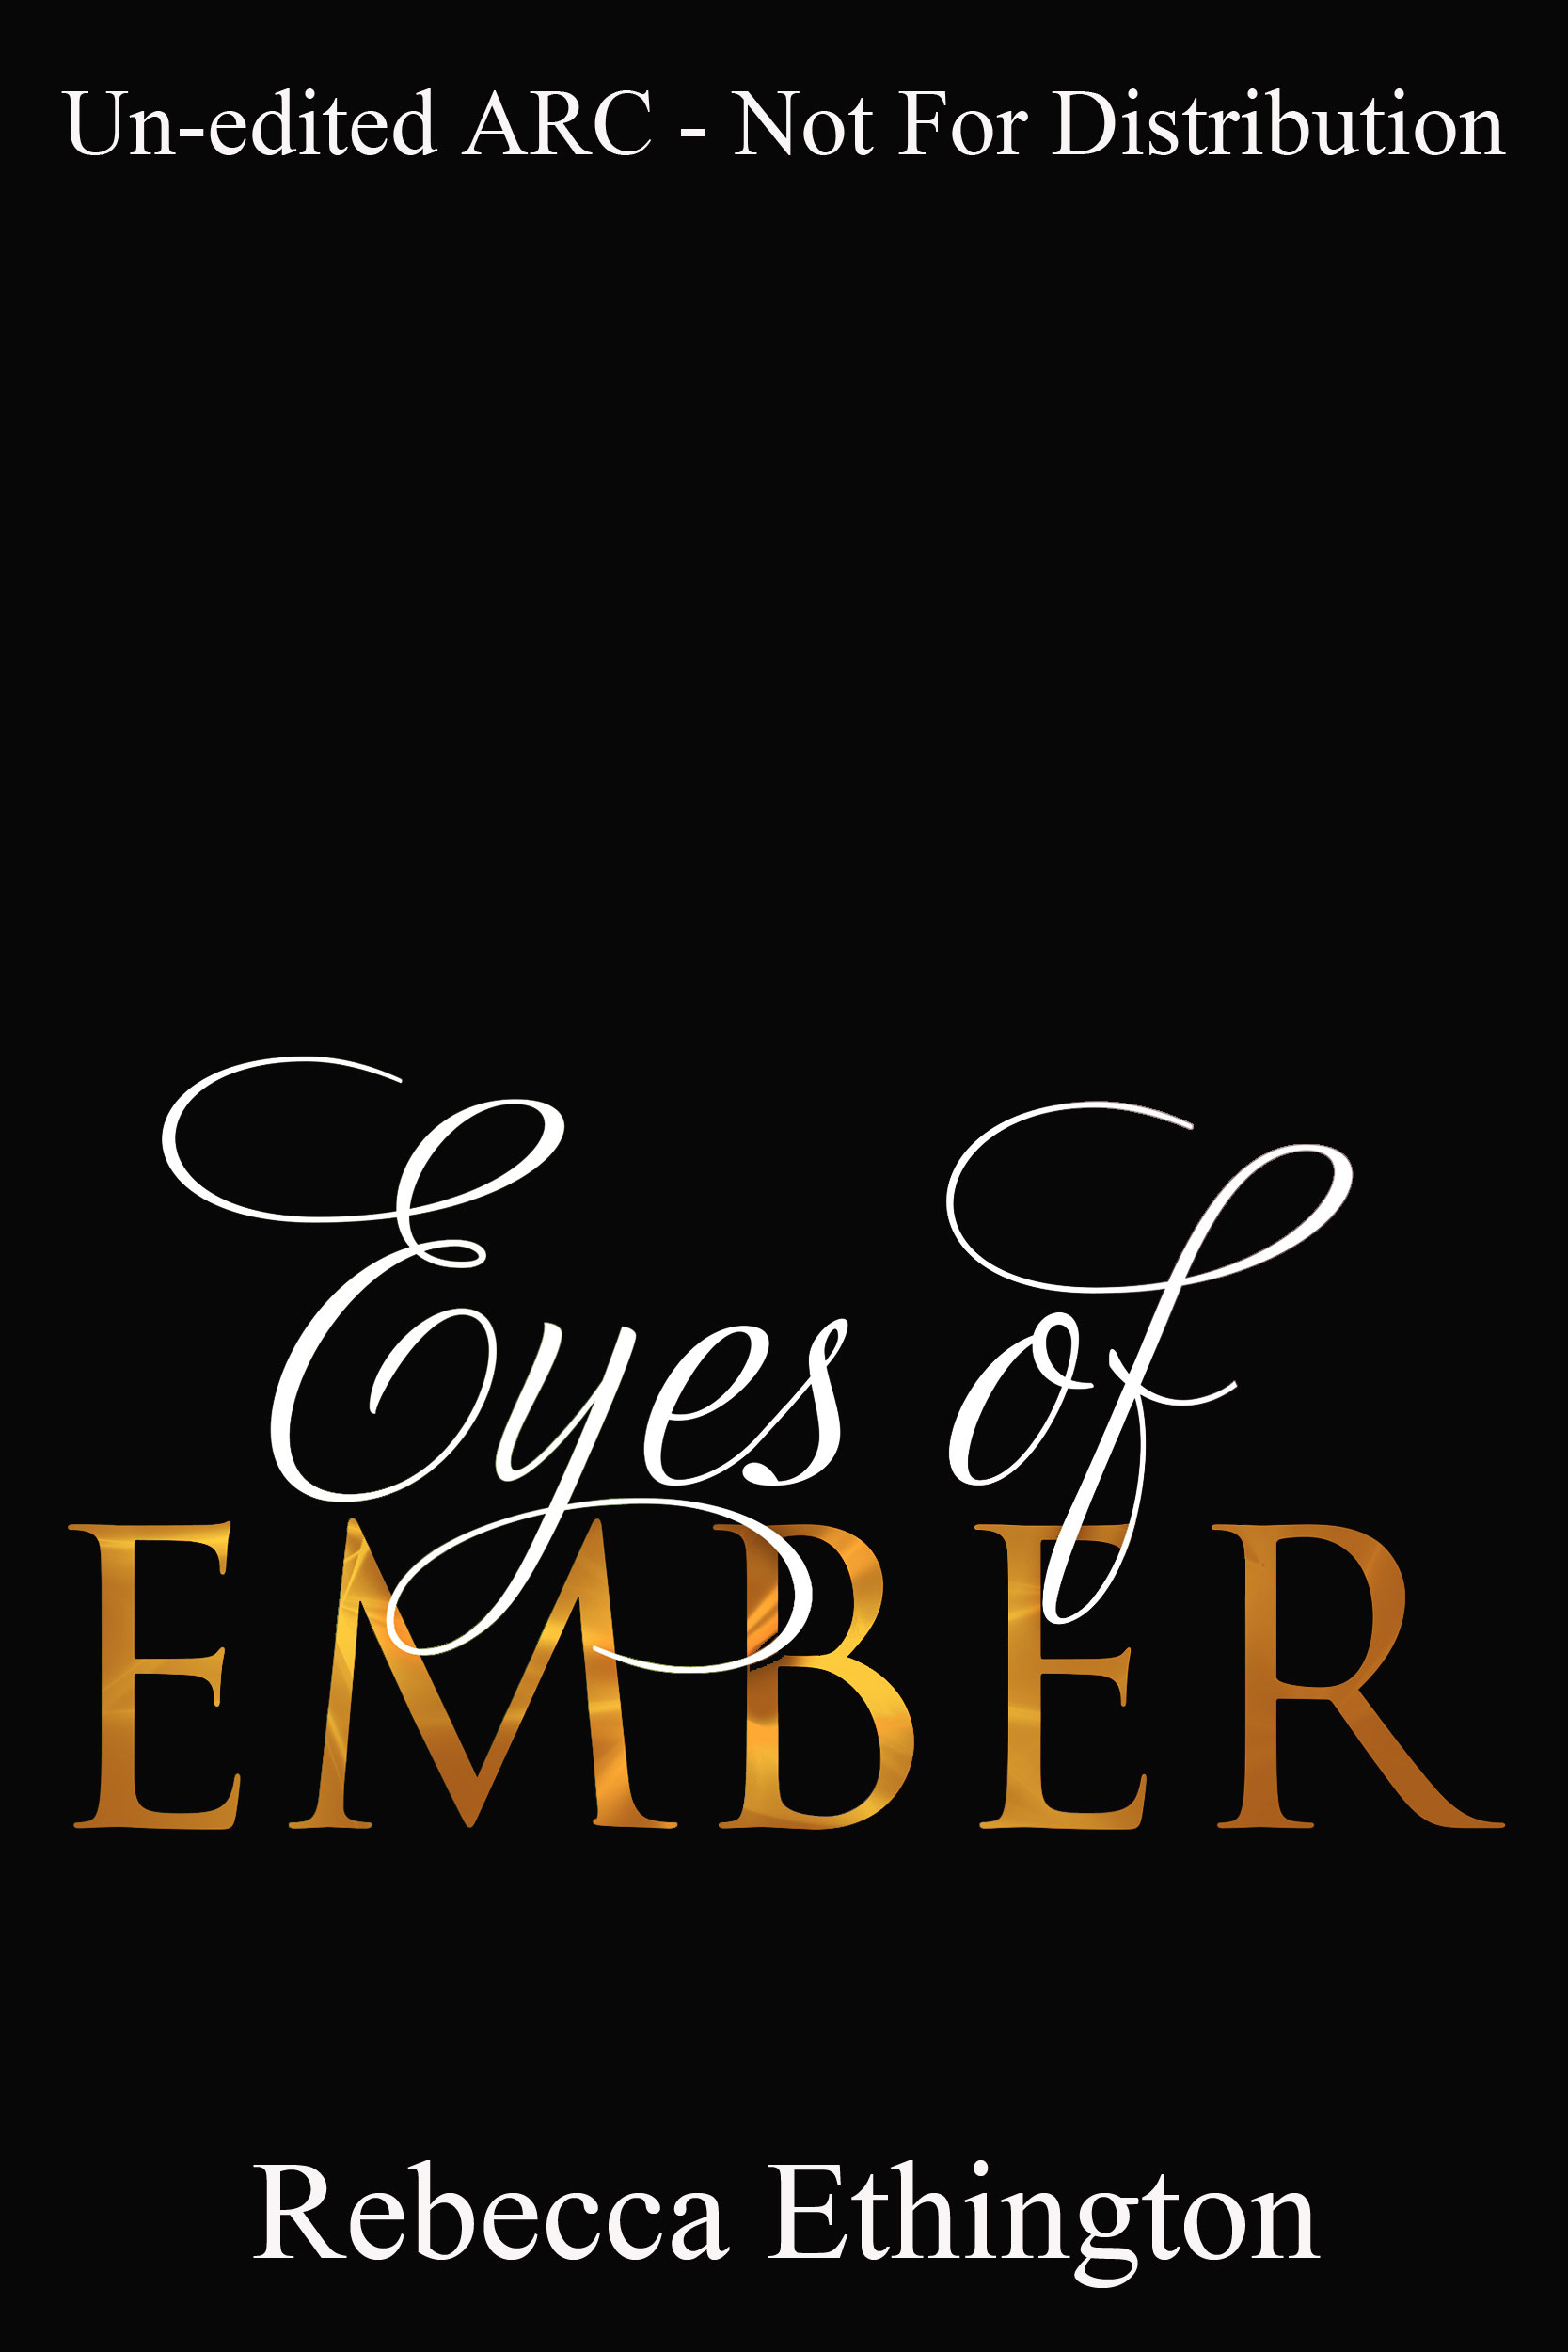 Cover Reveal – Eyes of Ember